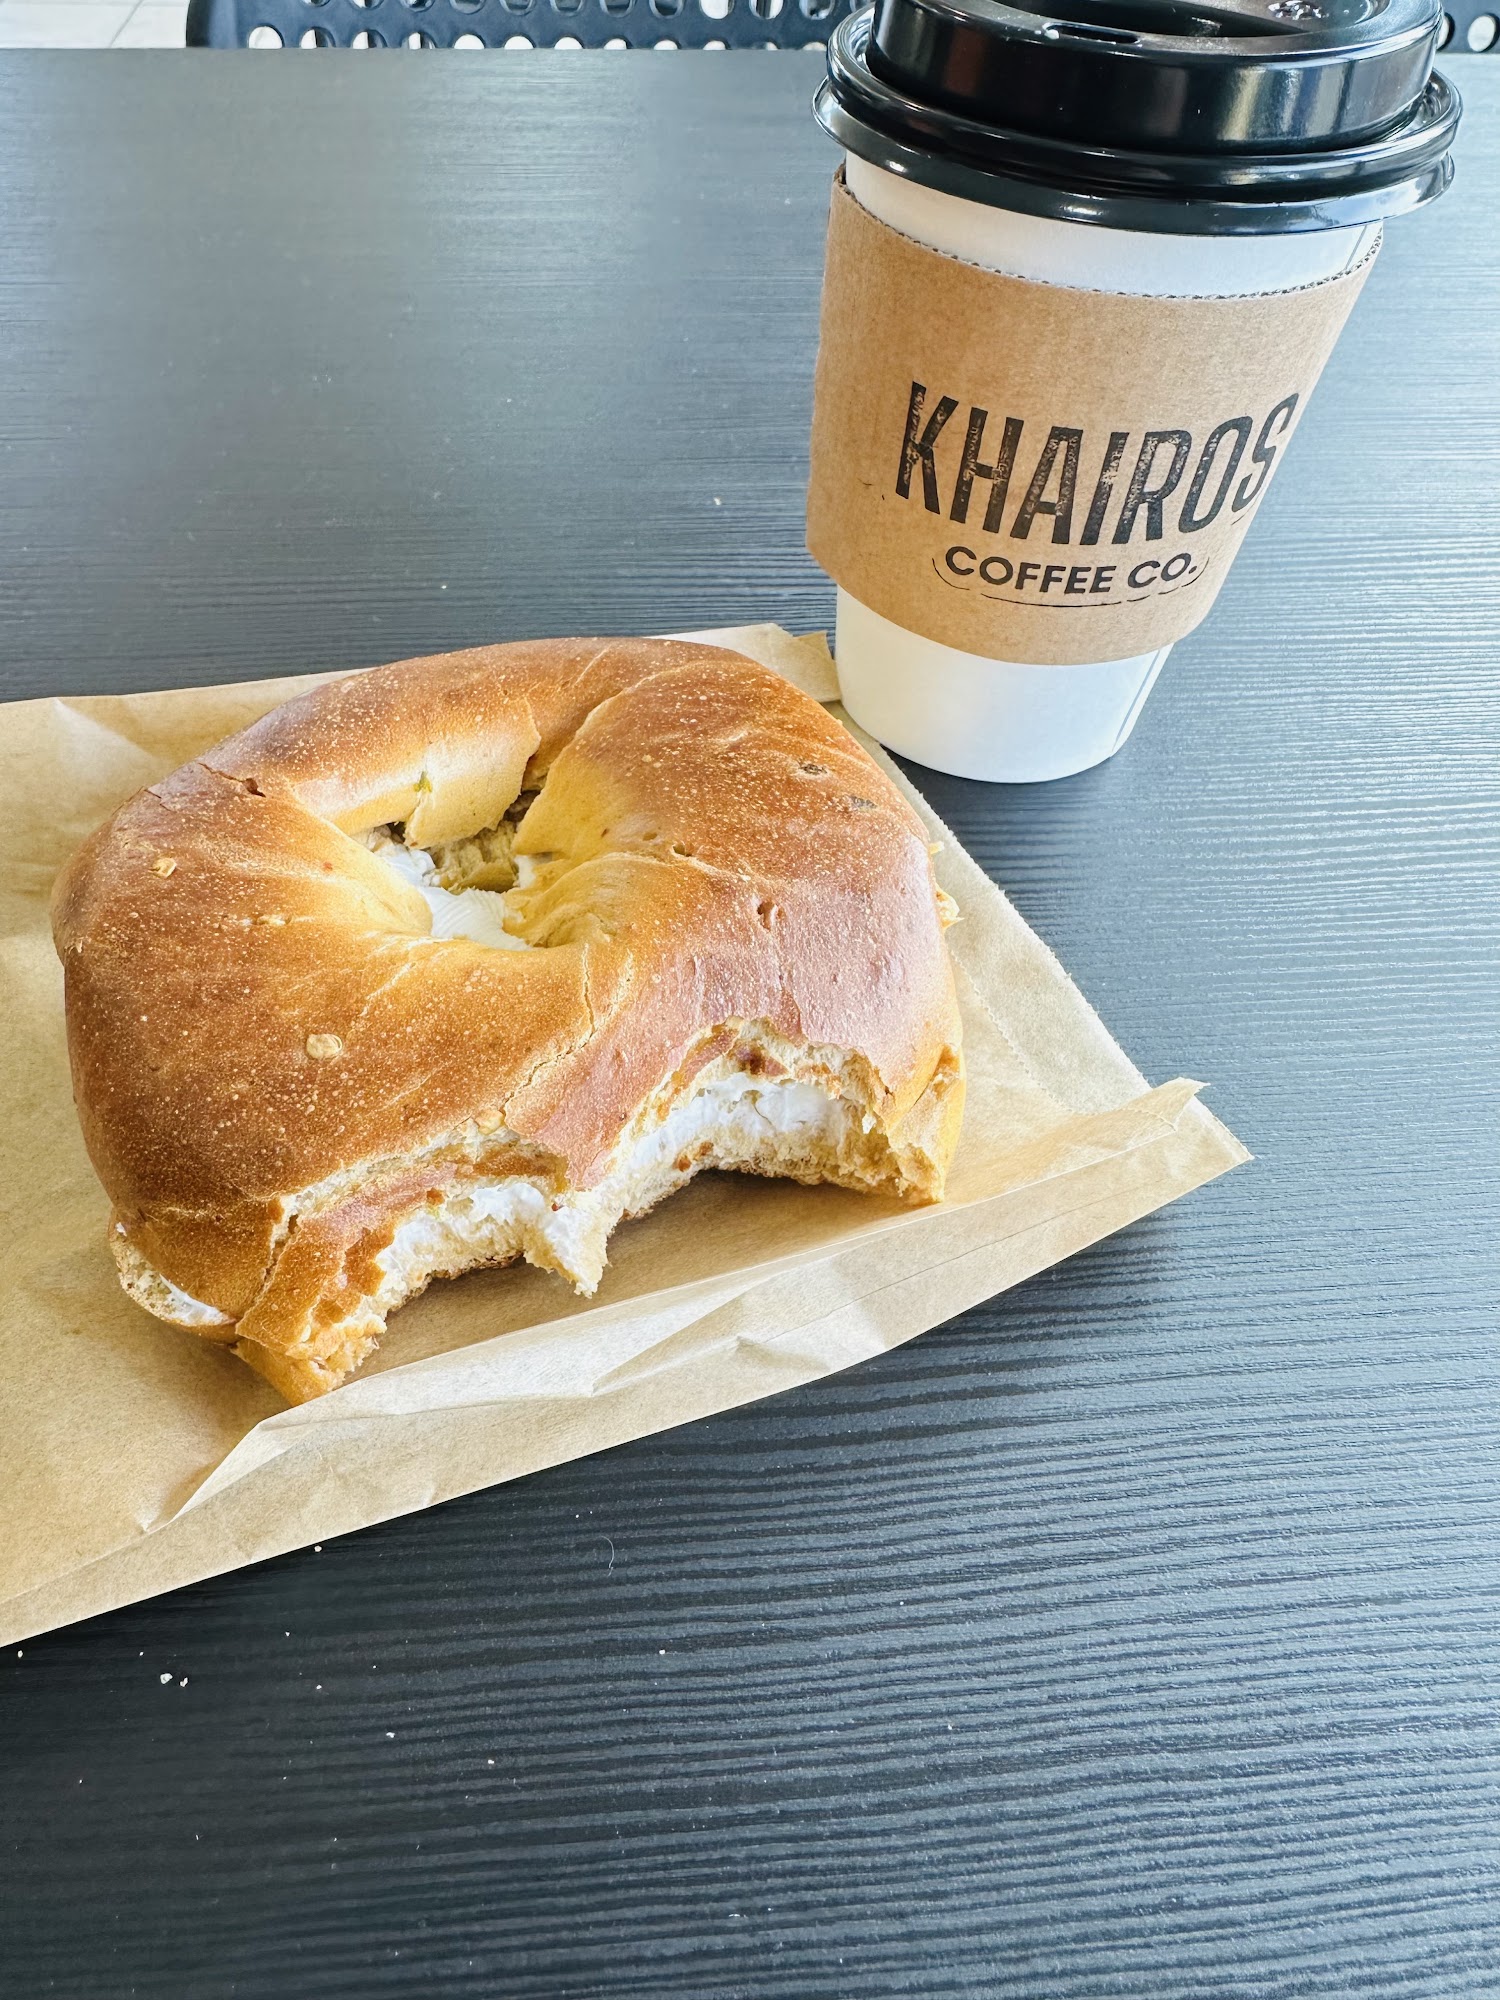 Khairos Coffee Co.